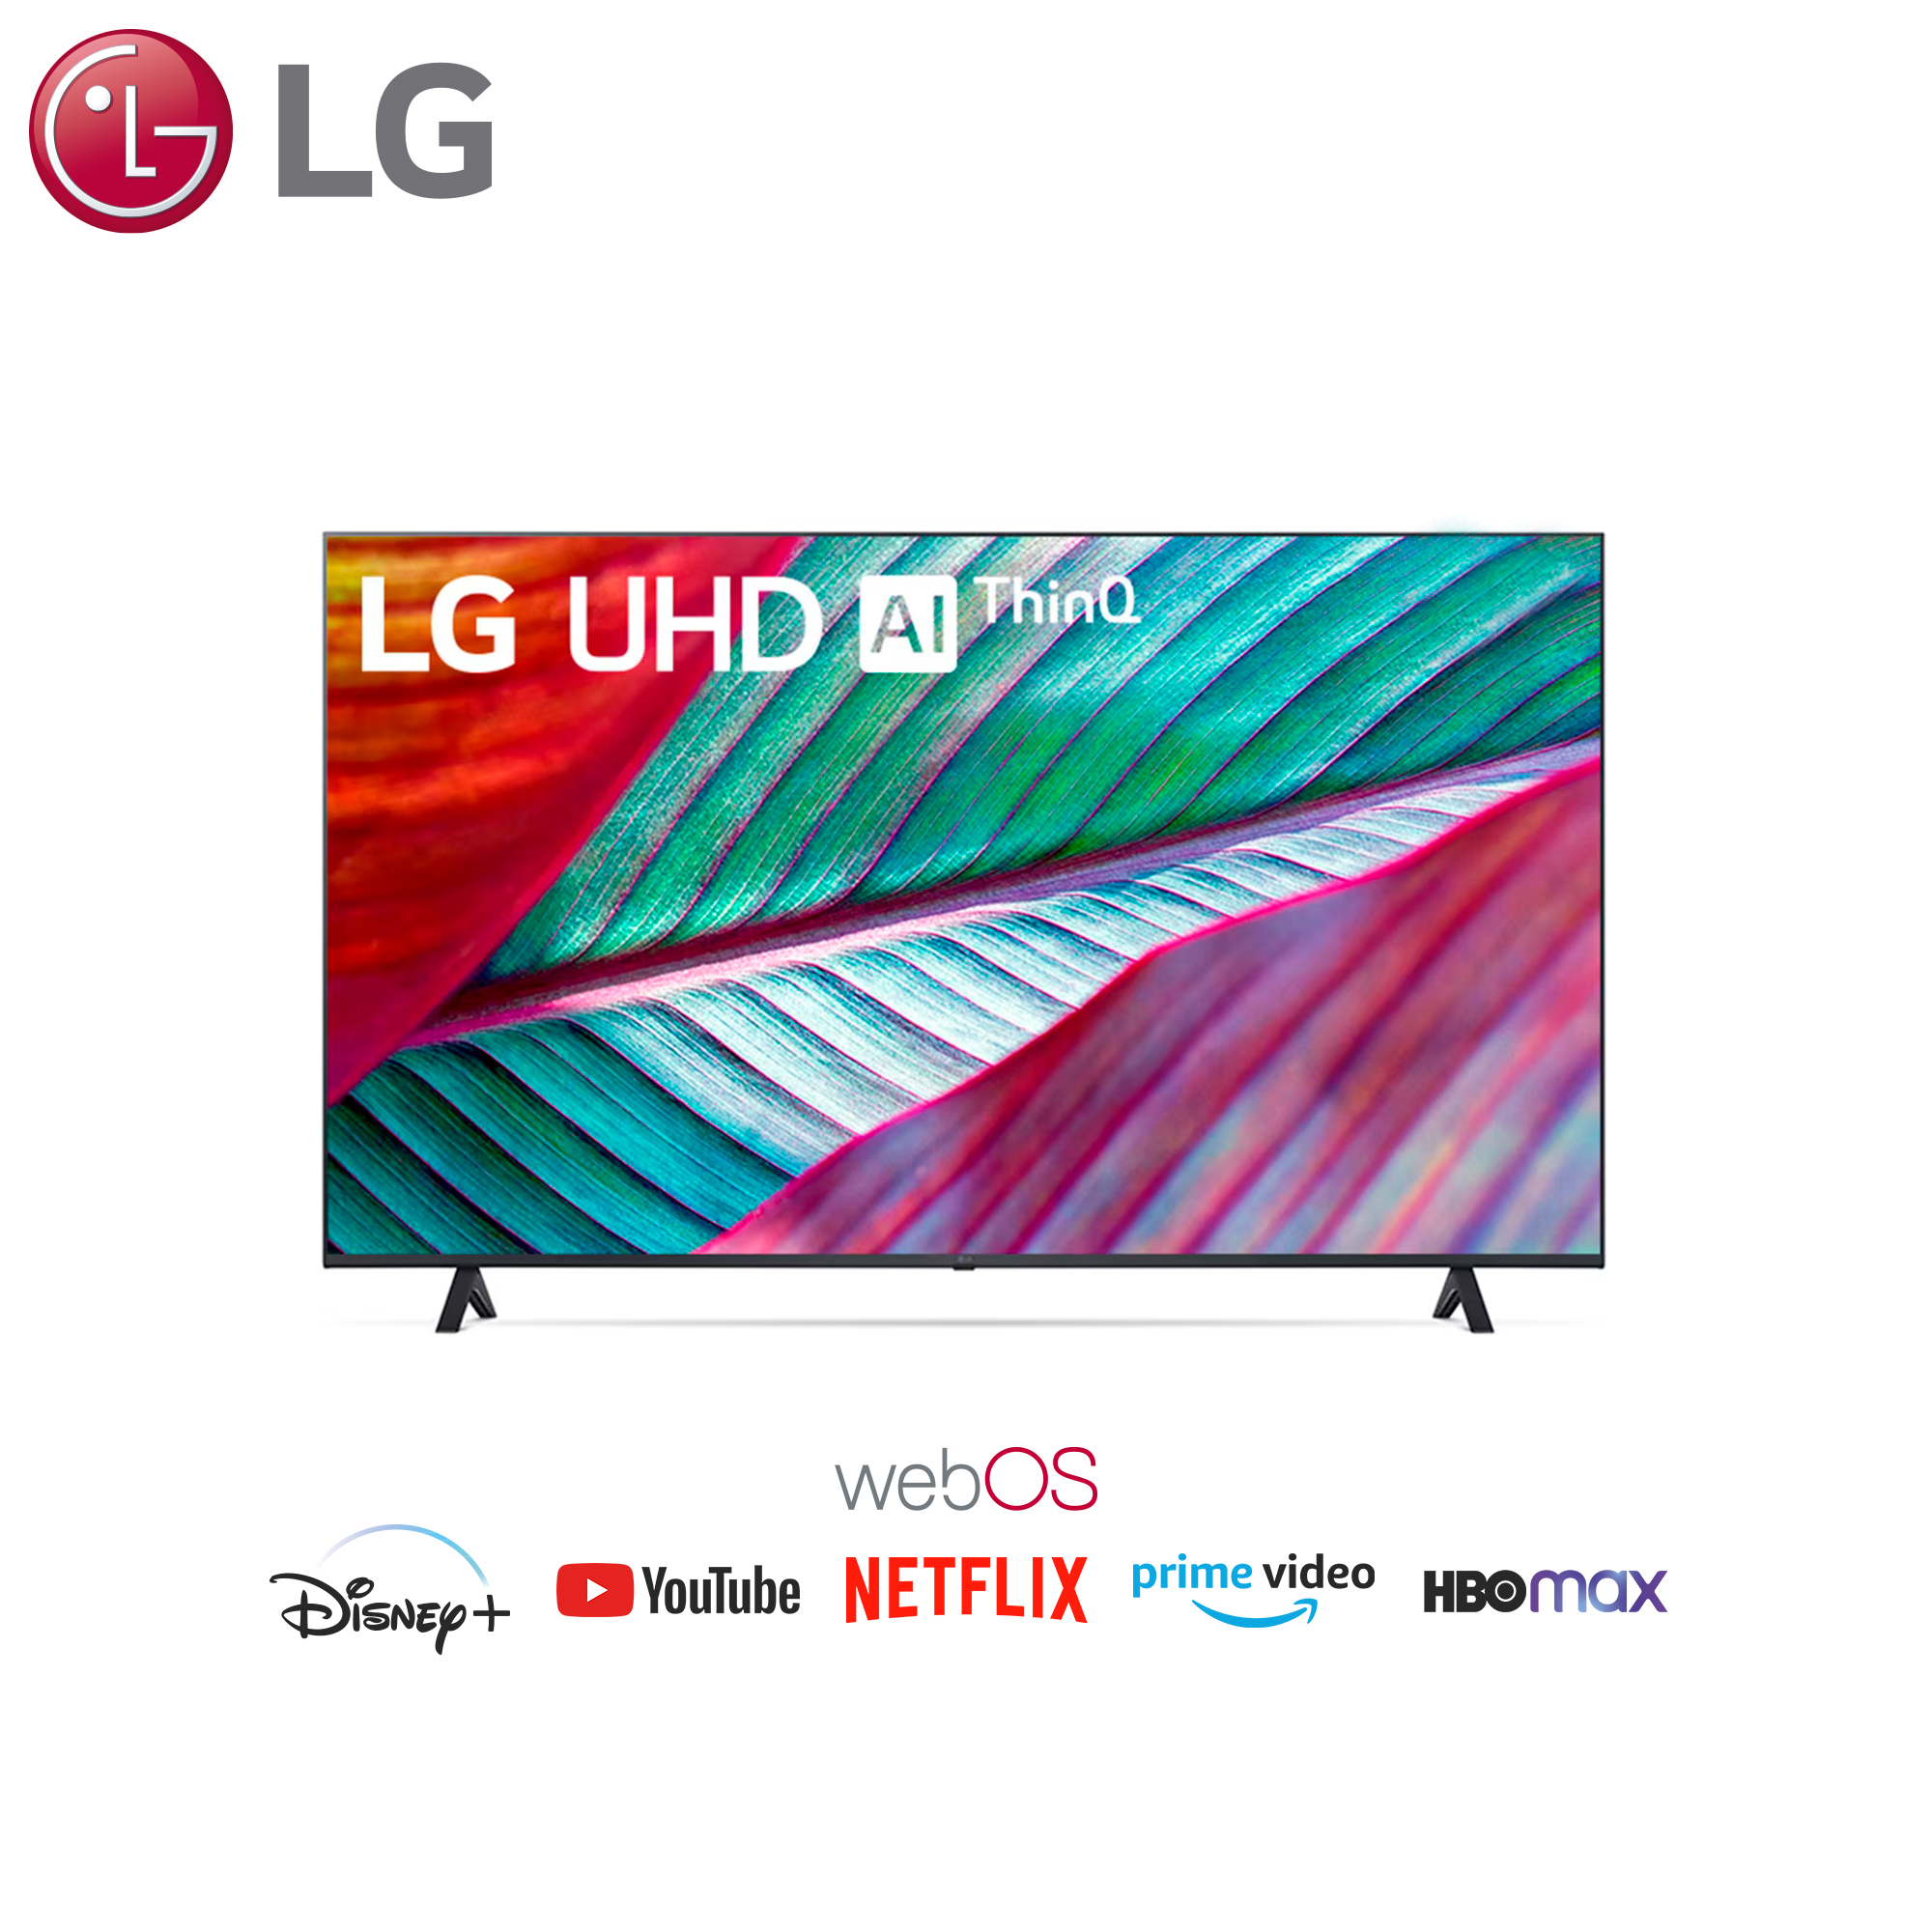 Pantalla LED LG 55 Ultra HD 4K Smart TV 55UR7800PSB